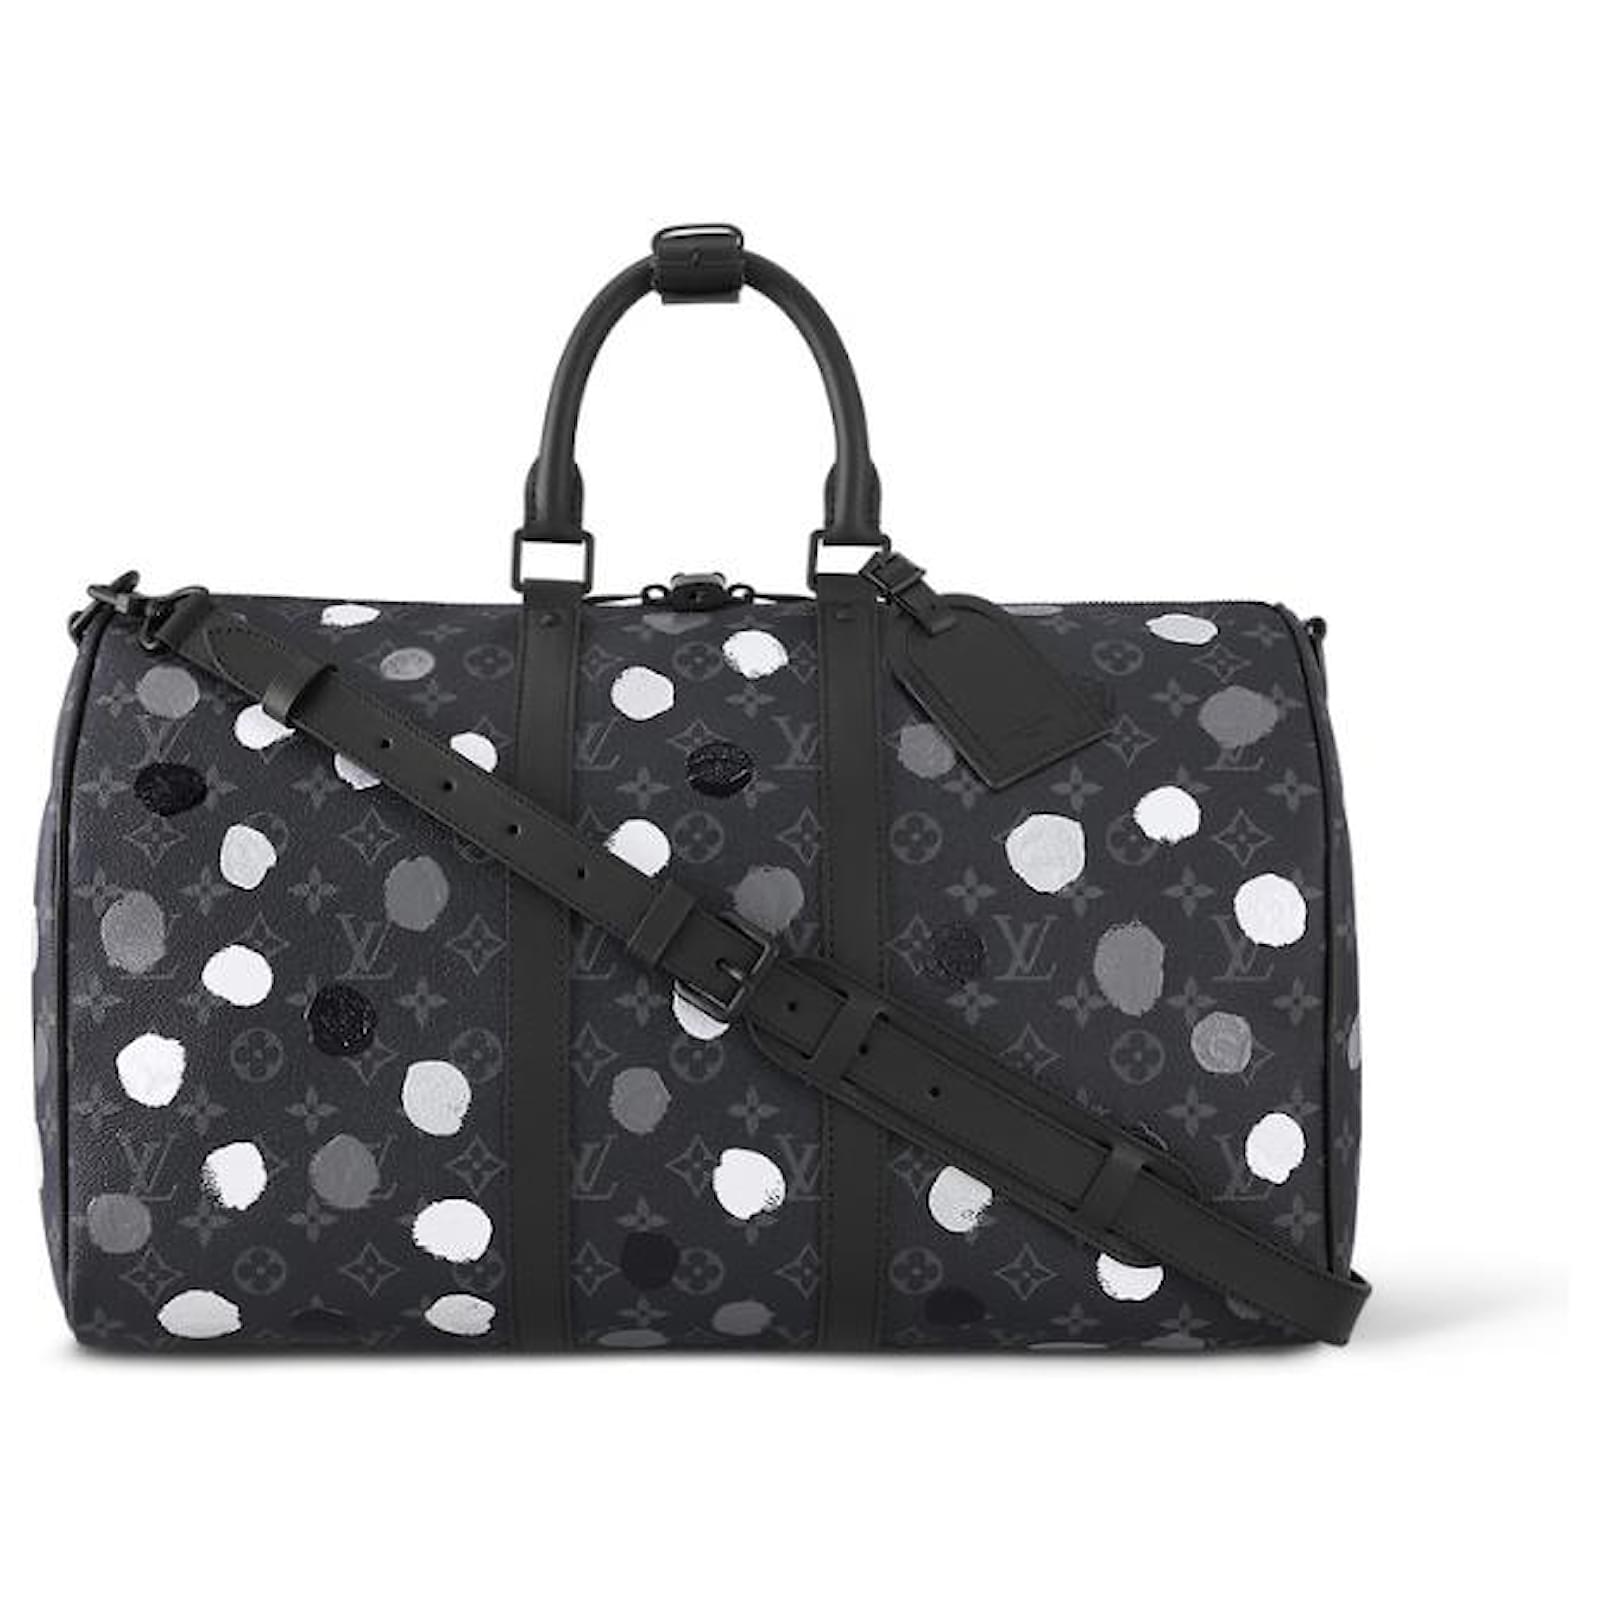 Louis Vuitton Keepall Trio Pocket Bag – ZAK BAGS ©️